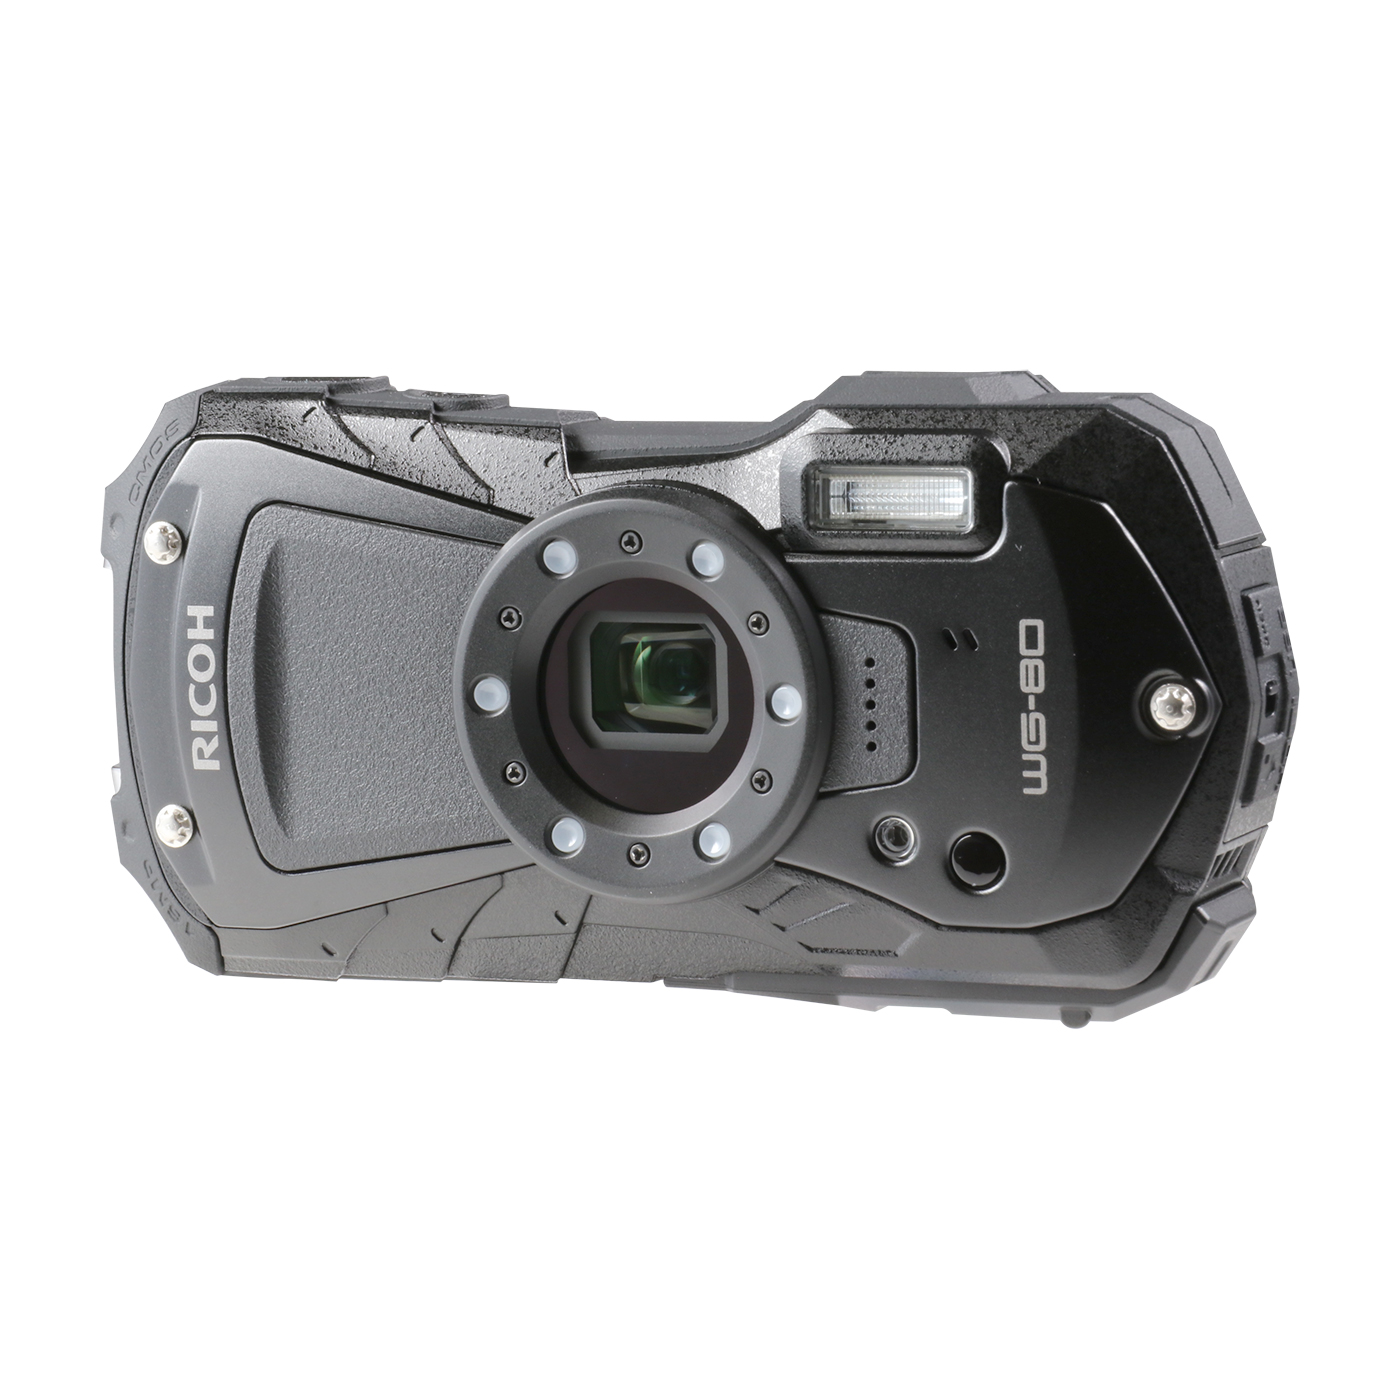 RICOH G800 デジタルカメラ - デジタルカメラ